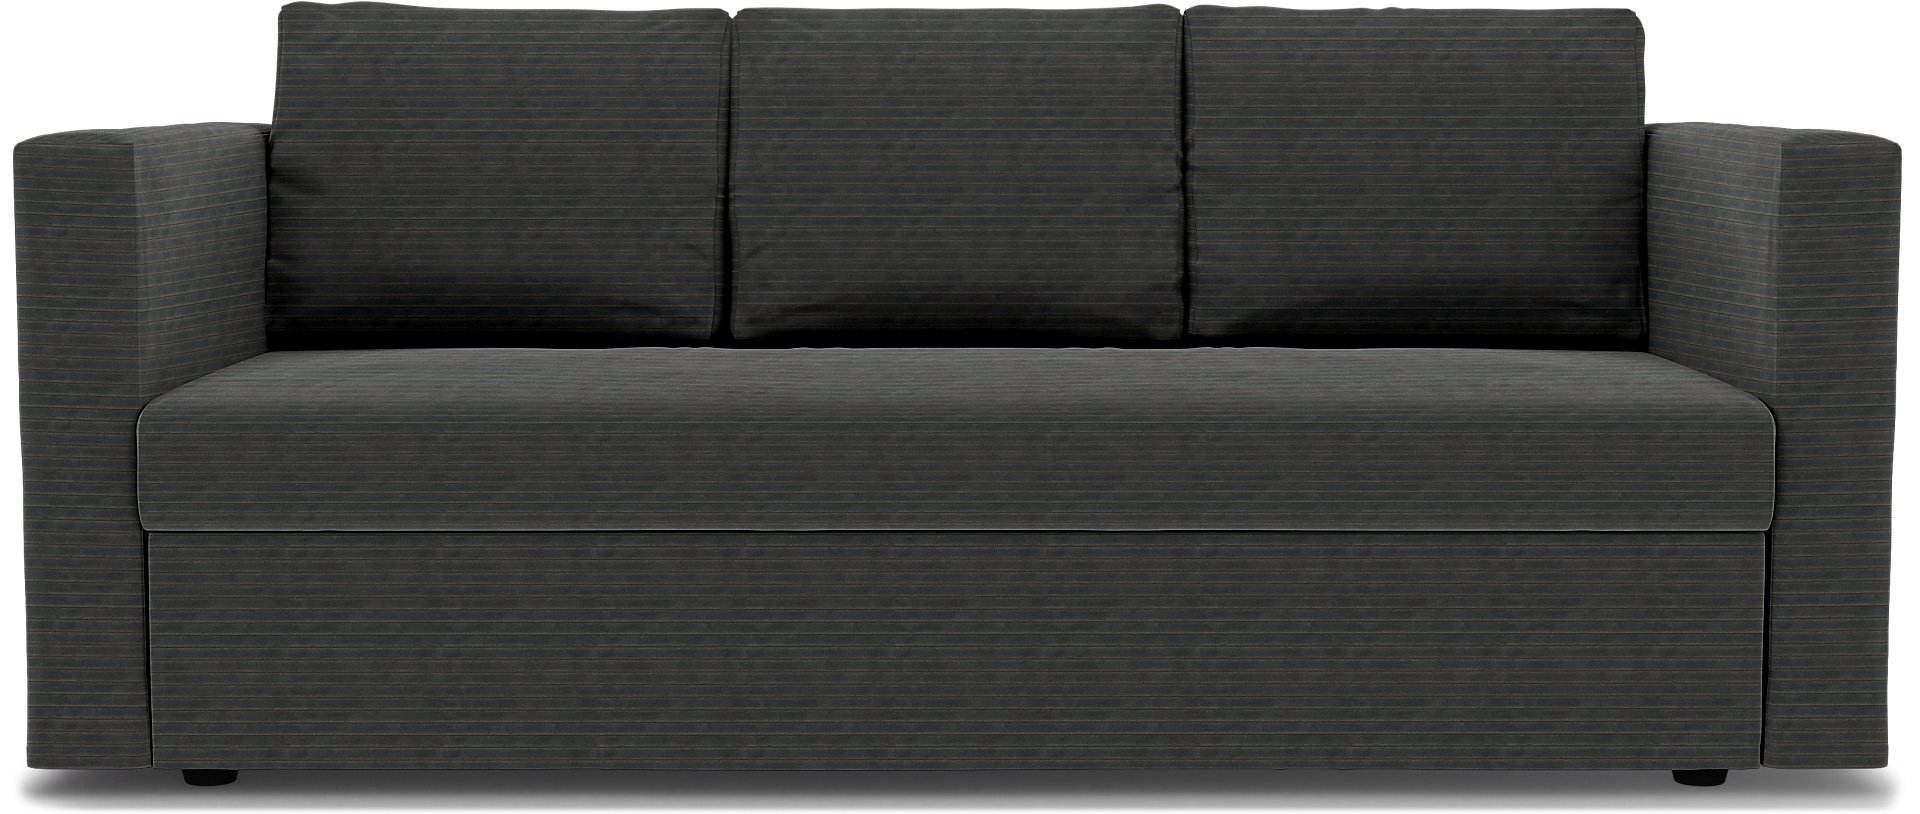 IKEA - Friheten 3 Seater Sofa Bed Cover, Licorice, Corduroy - Bemz